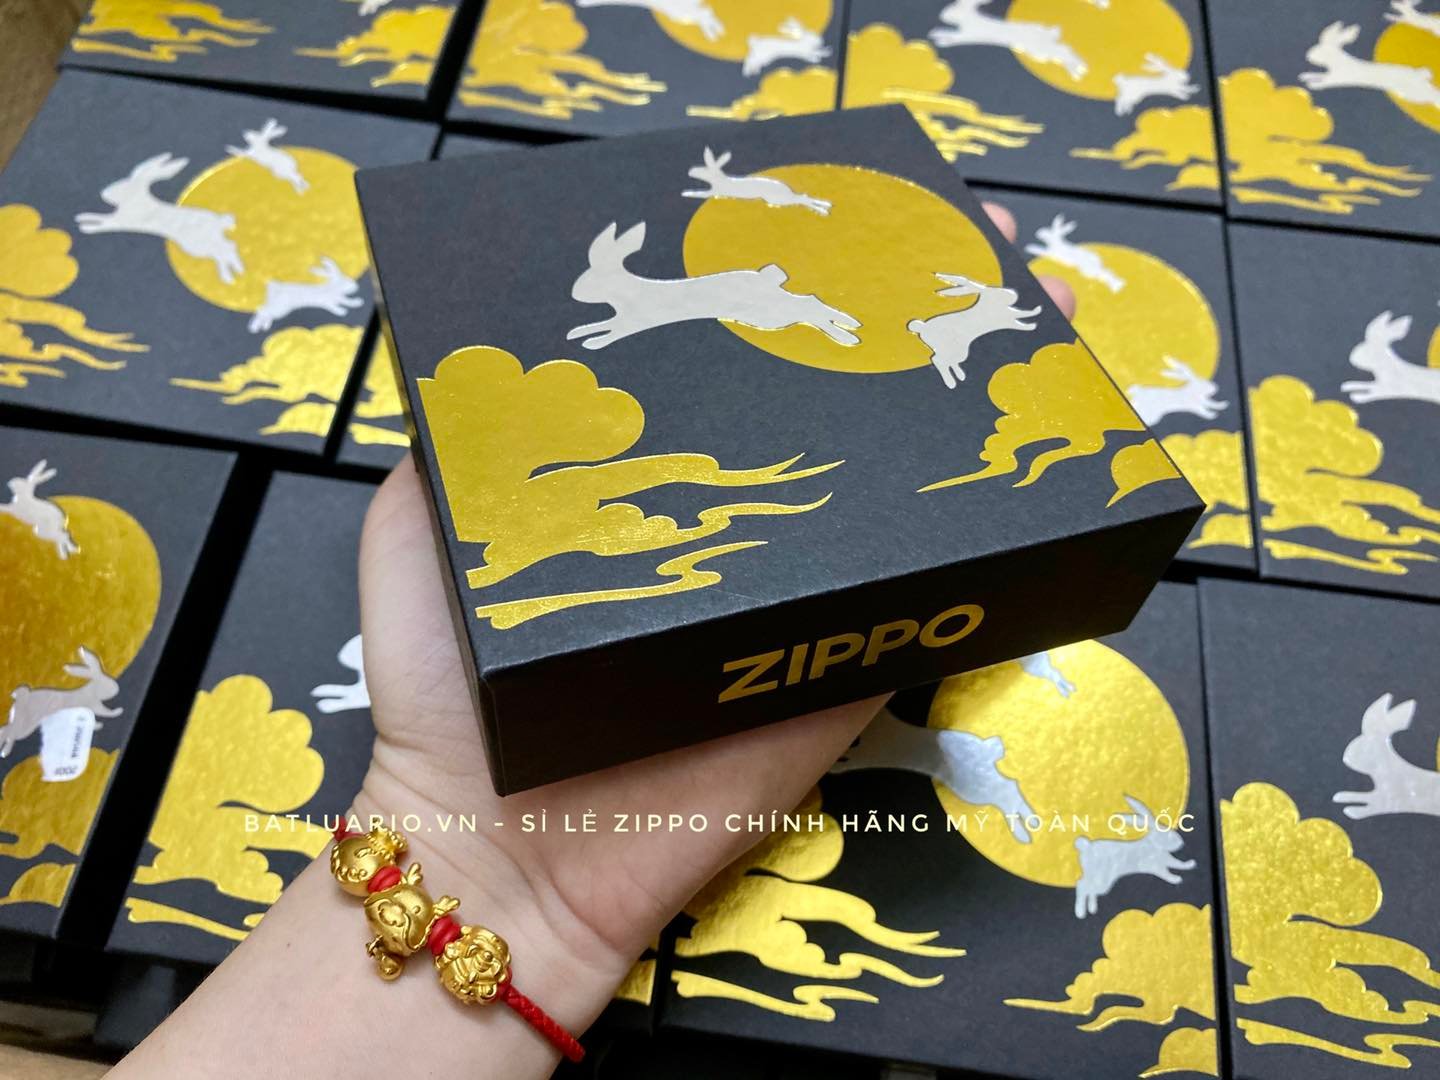 Zippo Limited Edition Mid Autumn Pattern Festival - Moon and Rabbits Design CZA-2-27 43